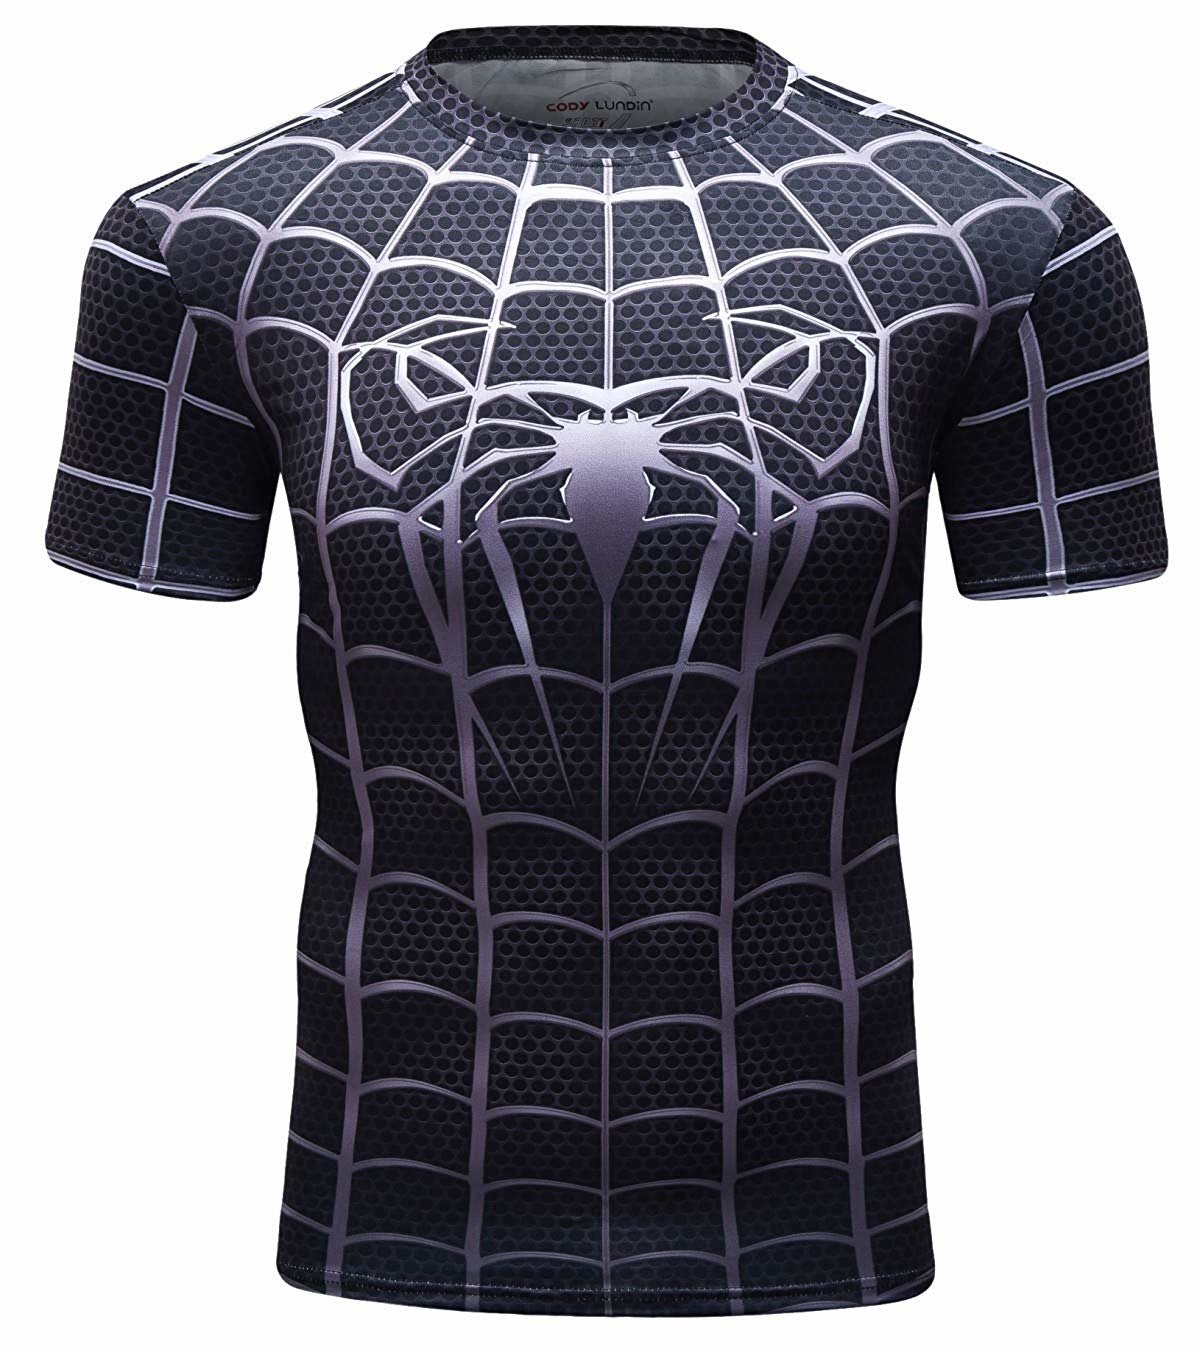 Spiderman Workout Shirt Black